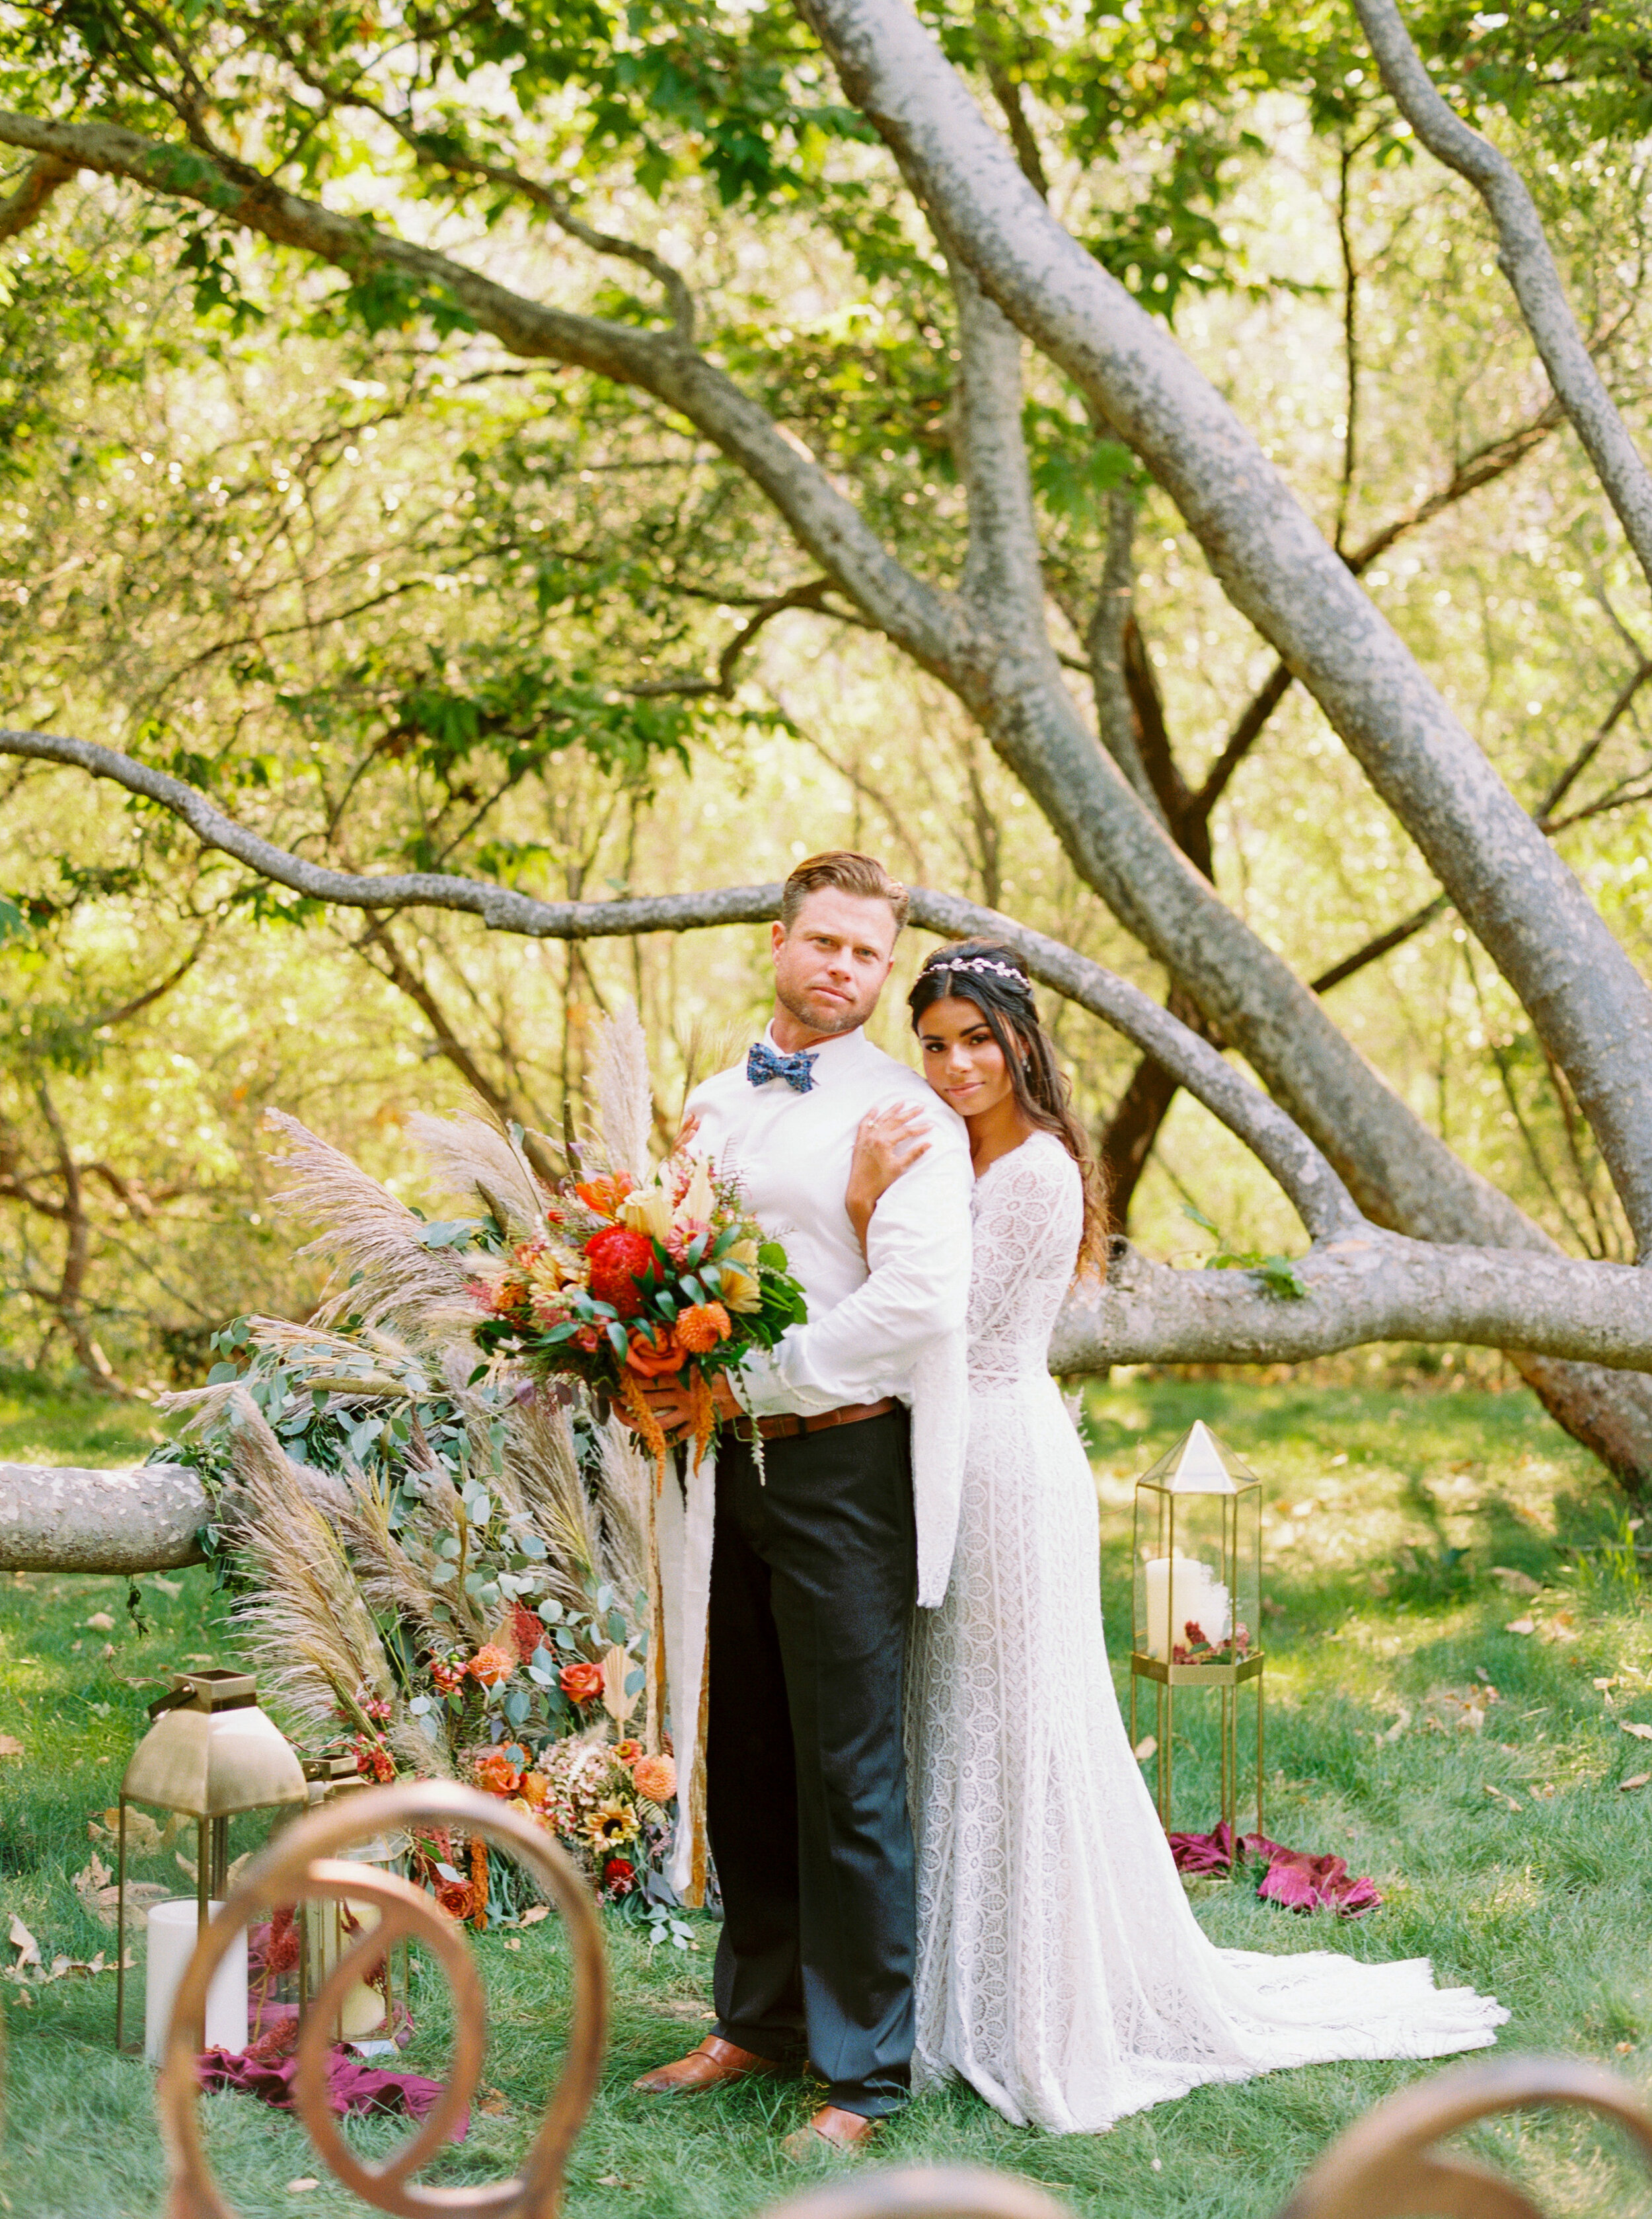 Sarahi Hadden - An Earthy Summer Boho Inspired Wedding with Sunset Hues at Gardener Ranch-132.jpg